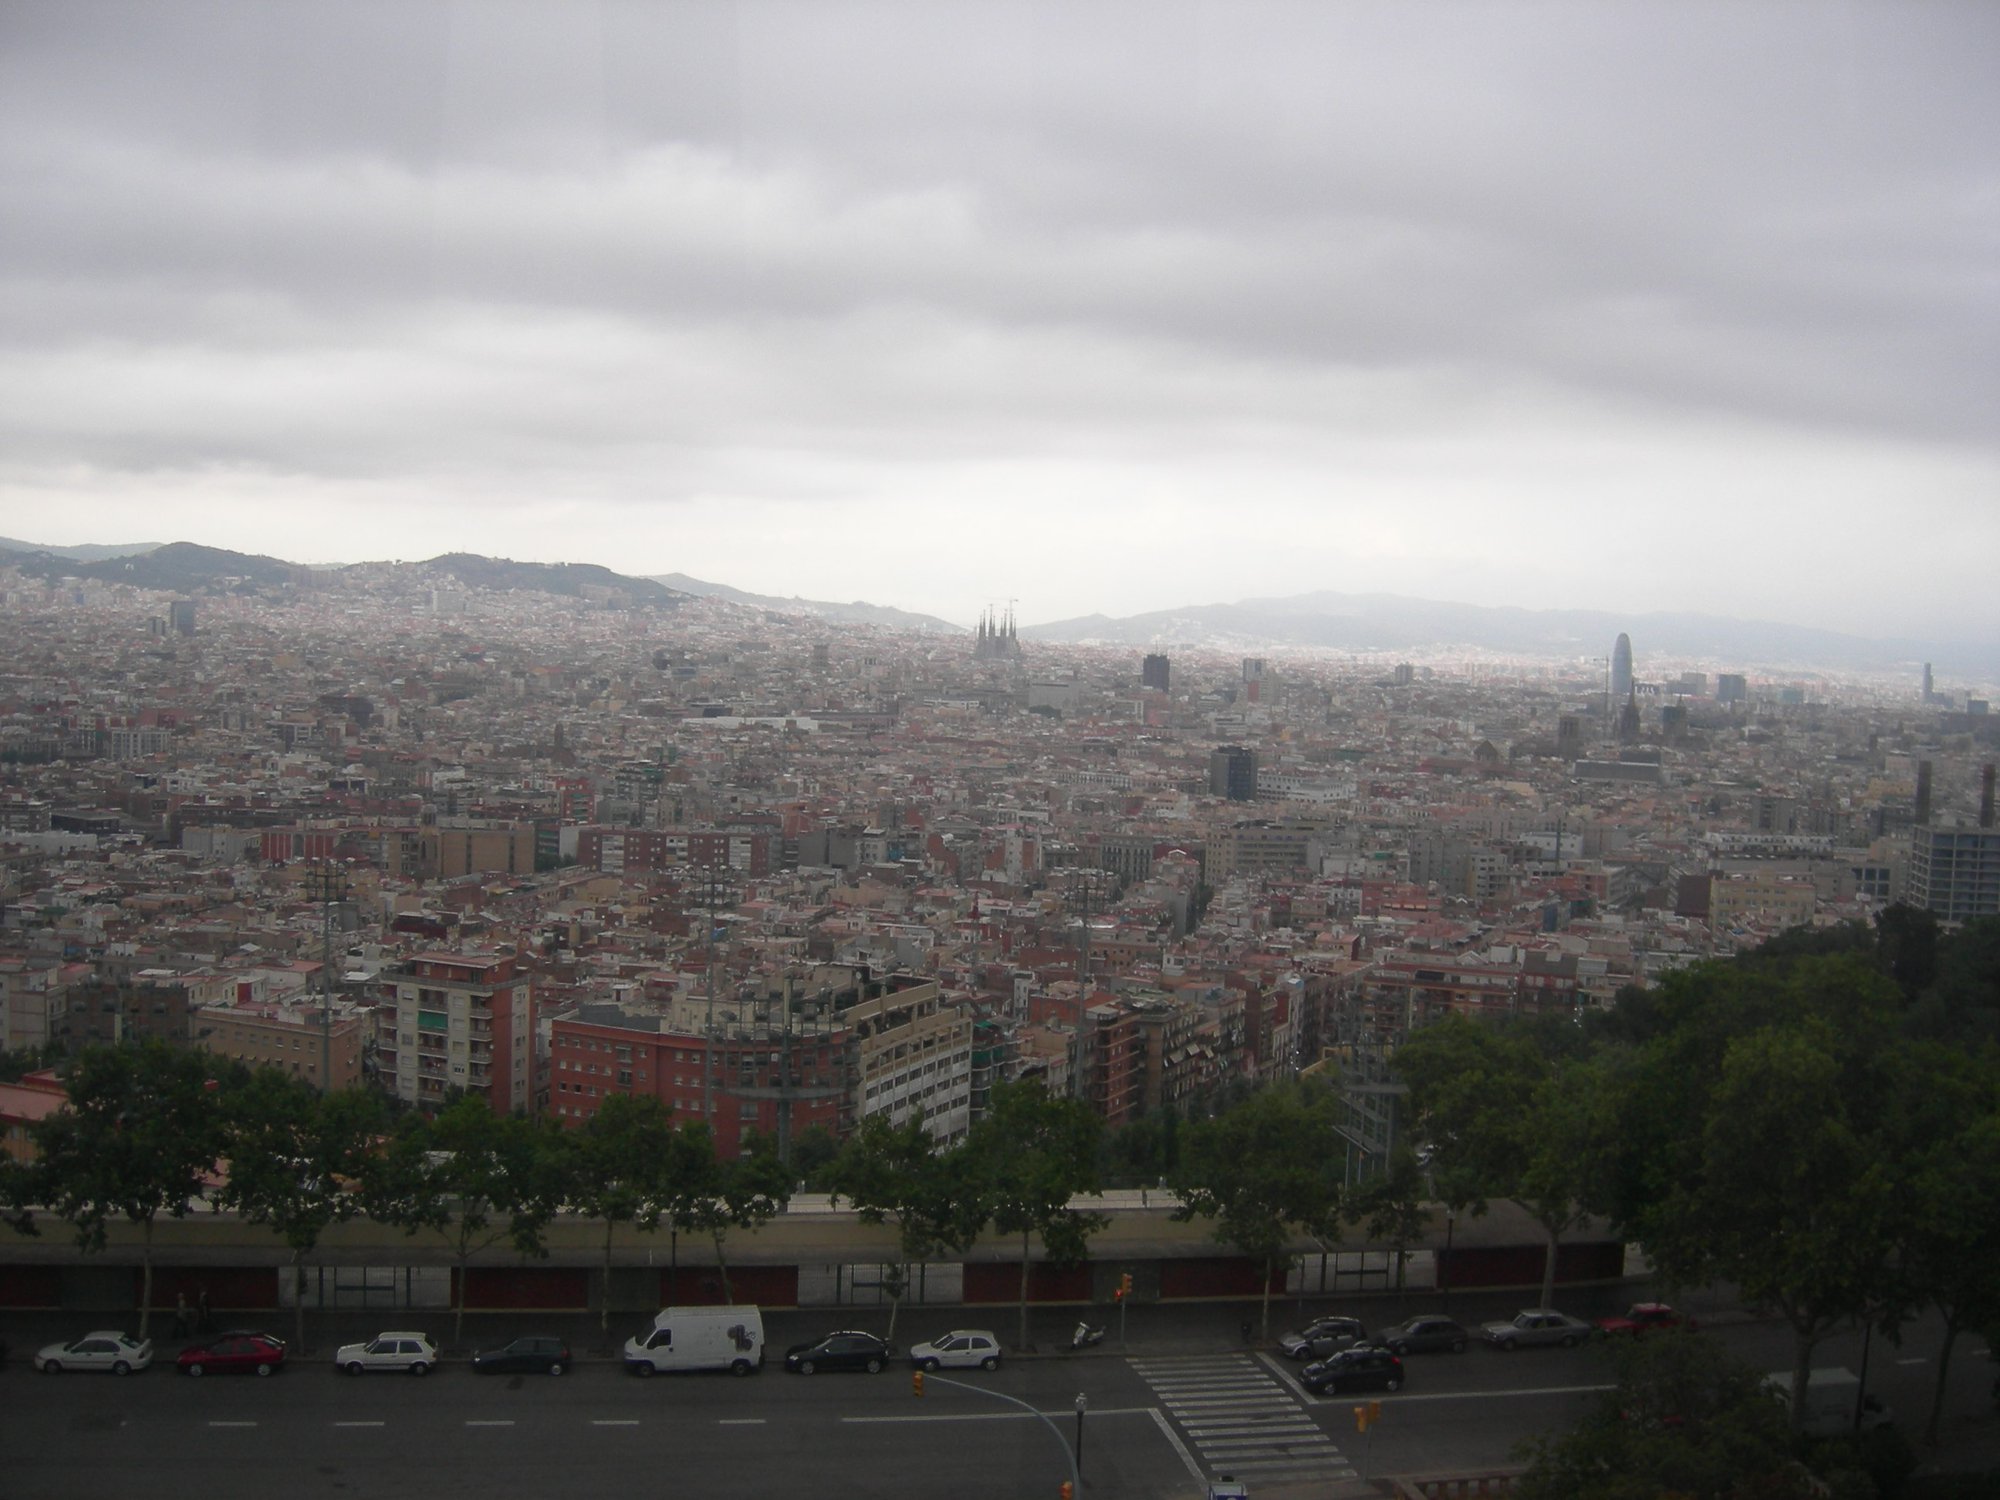 Barcelona. Before rain.